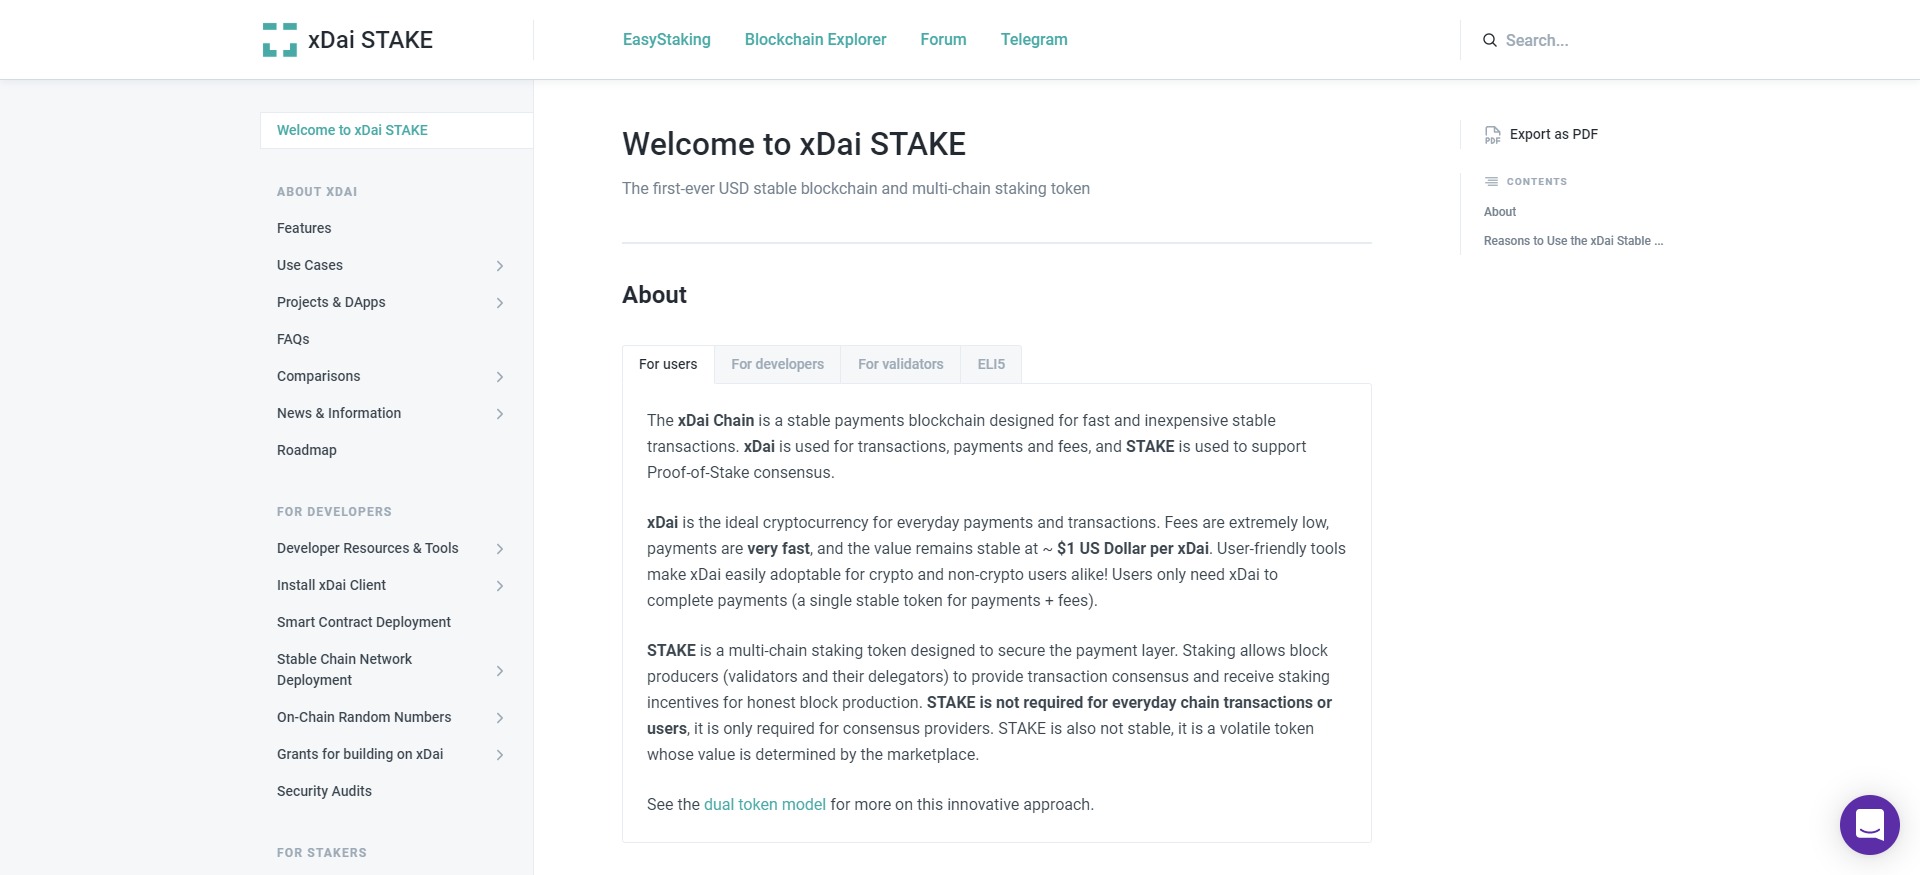 xDAI STAKE Price Prediction Website